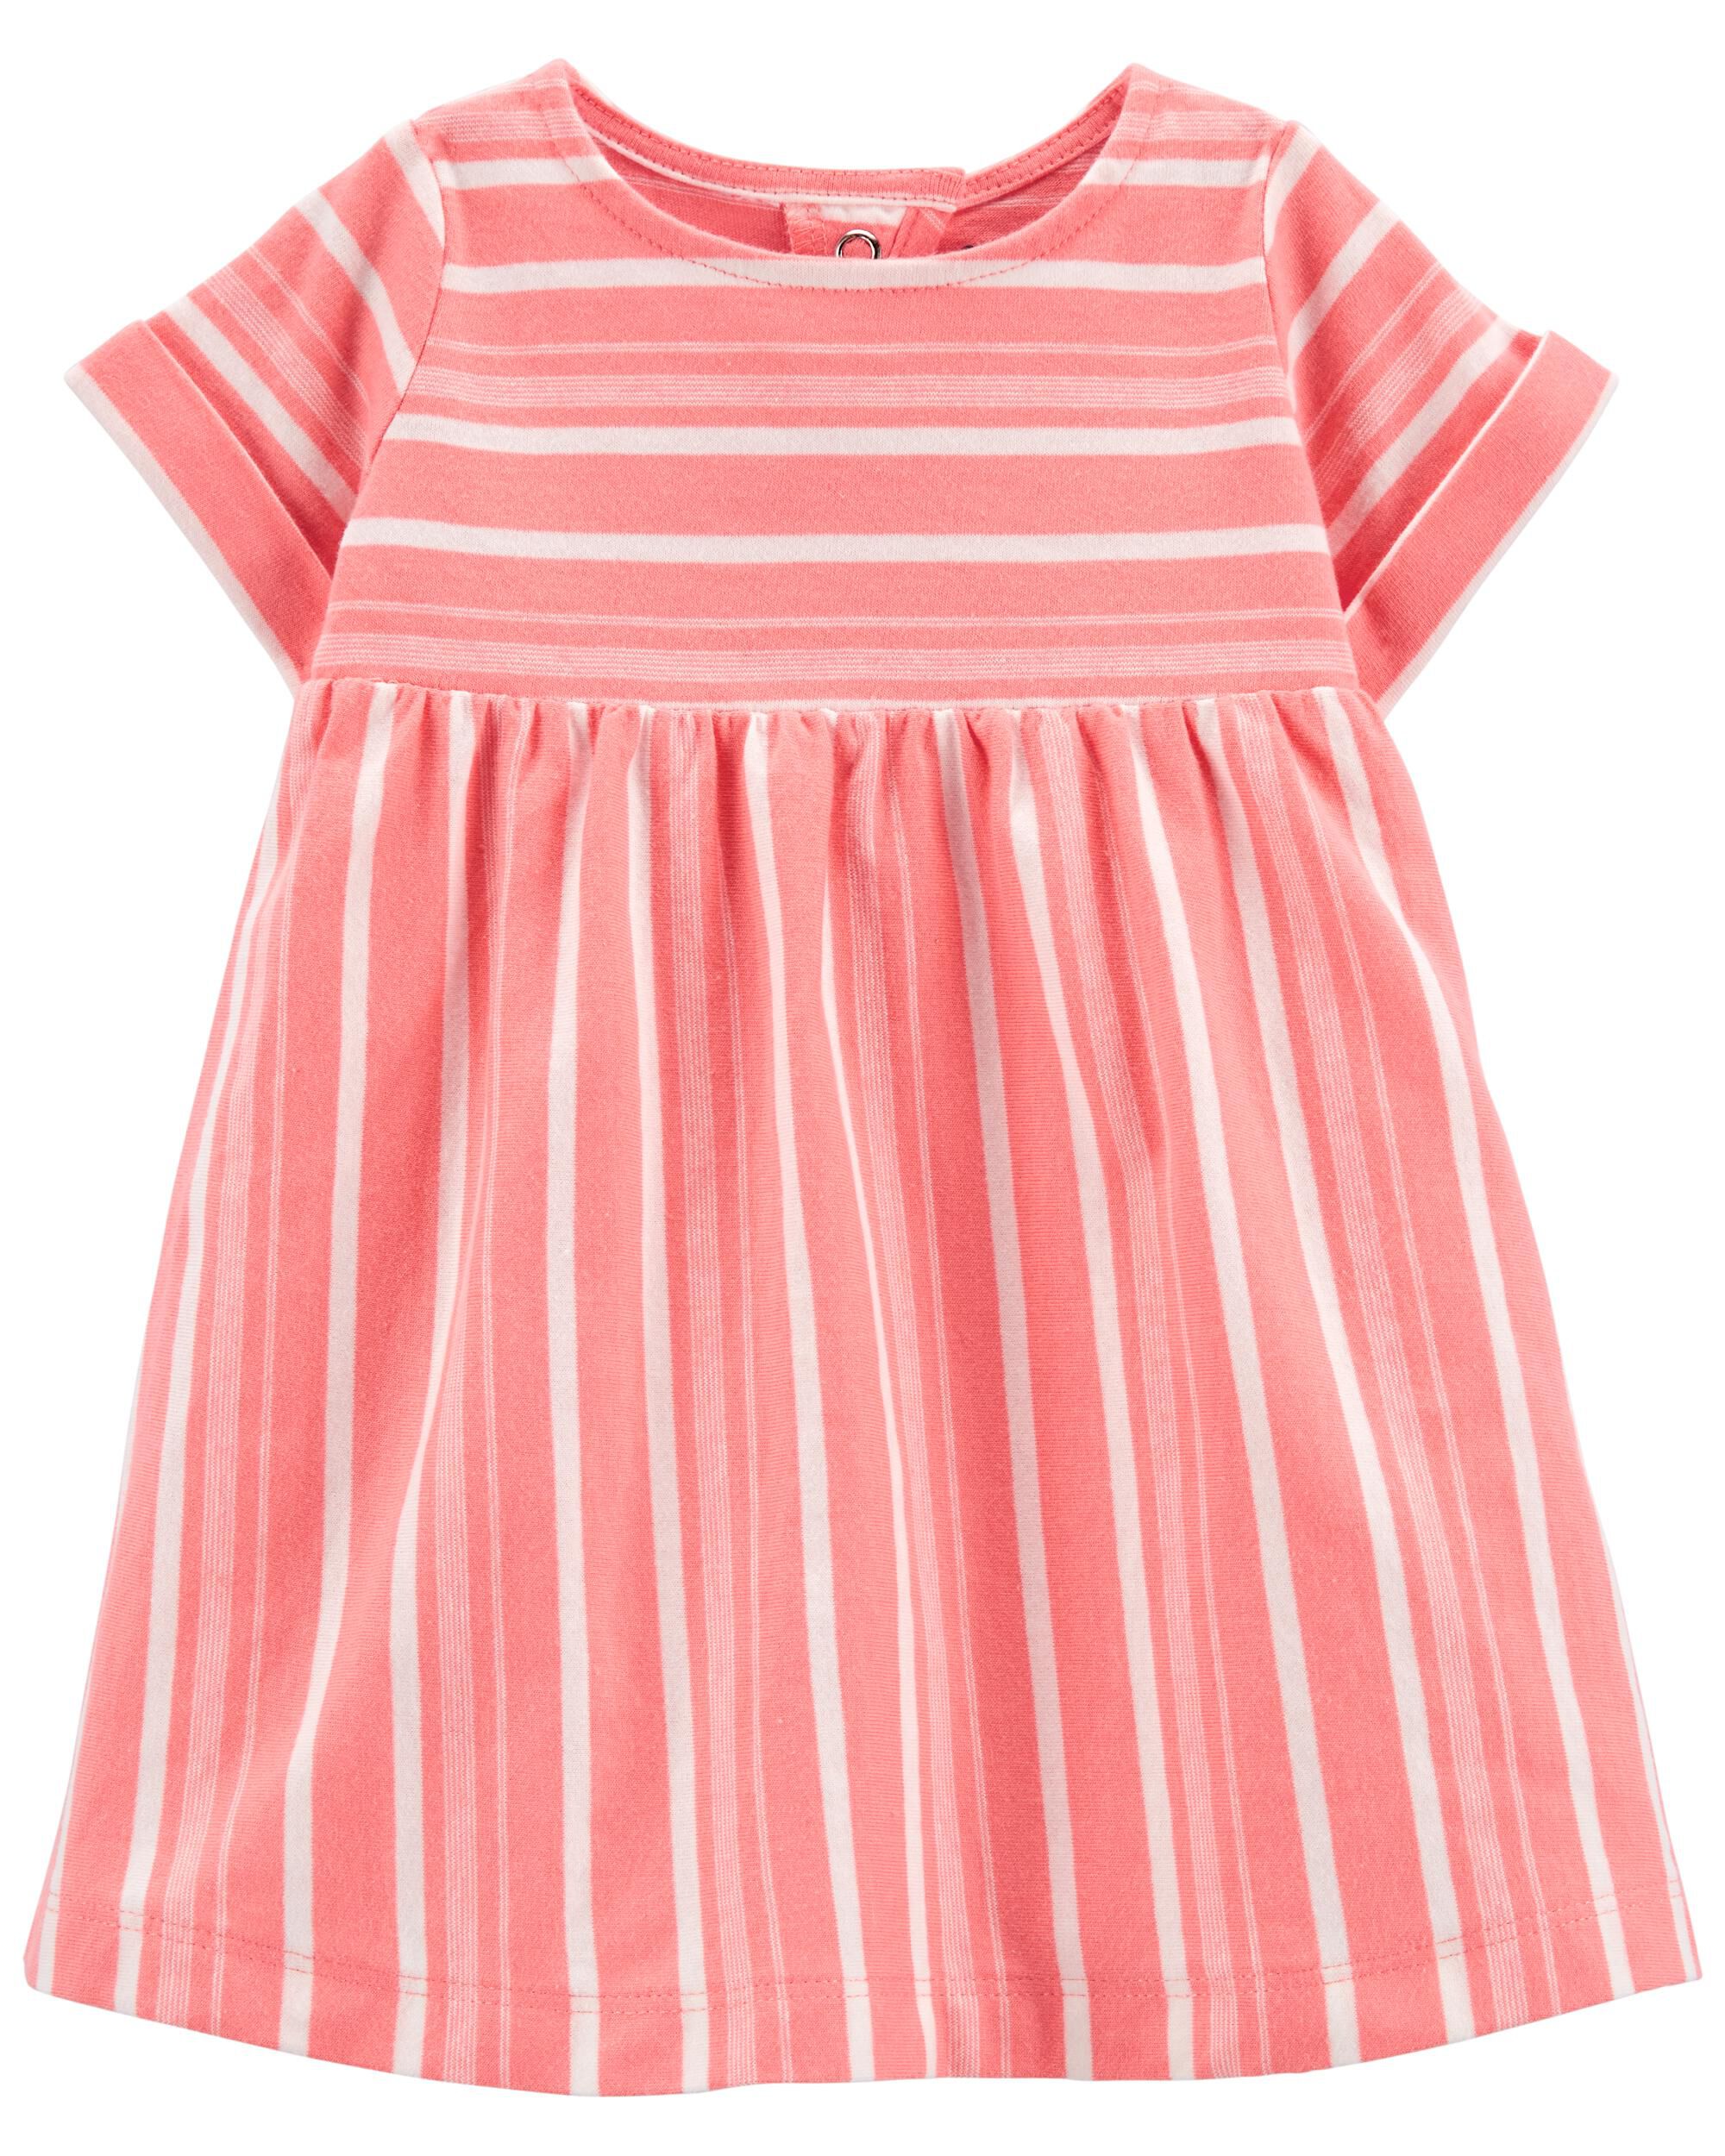 Baby Pink Striped Jersey Dress | carters.com